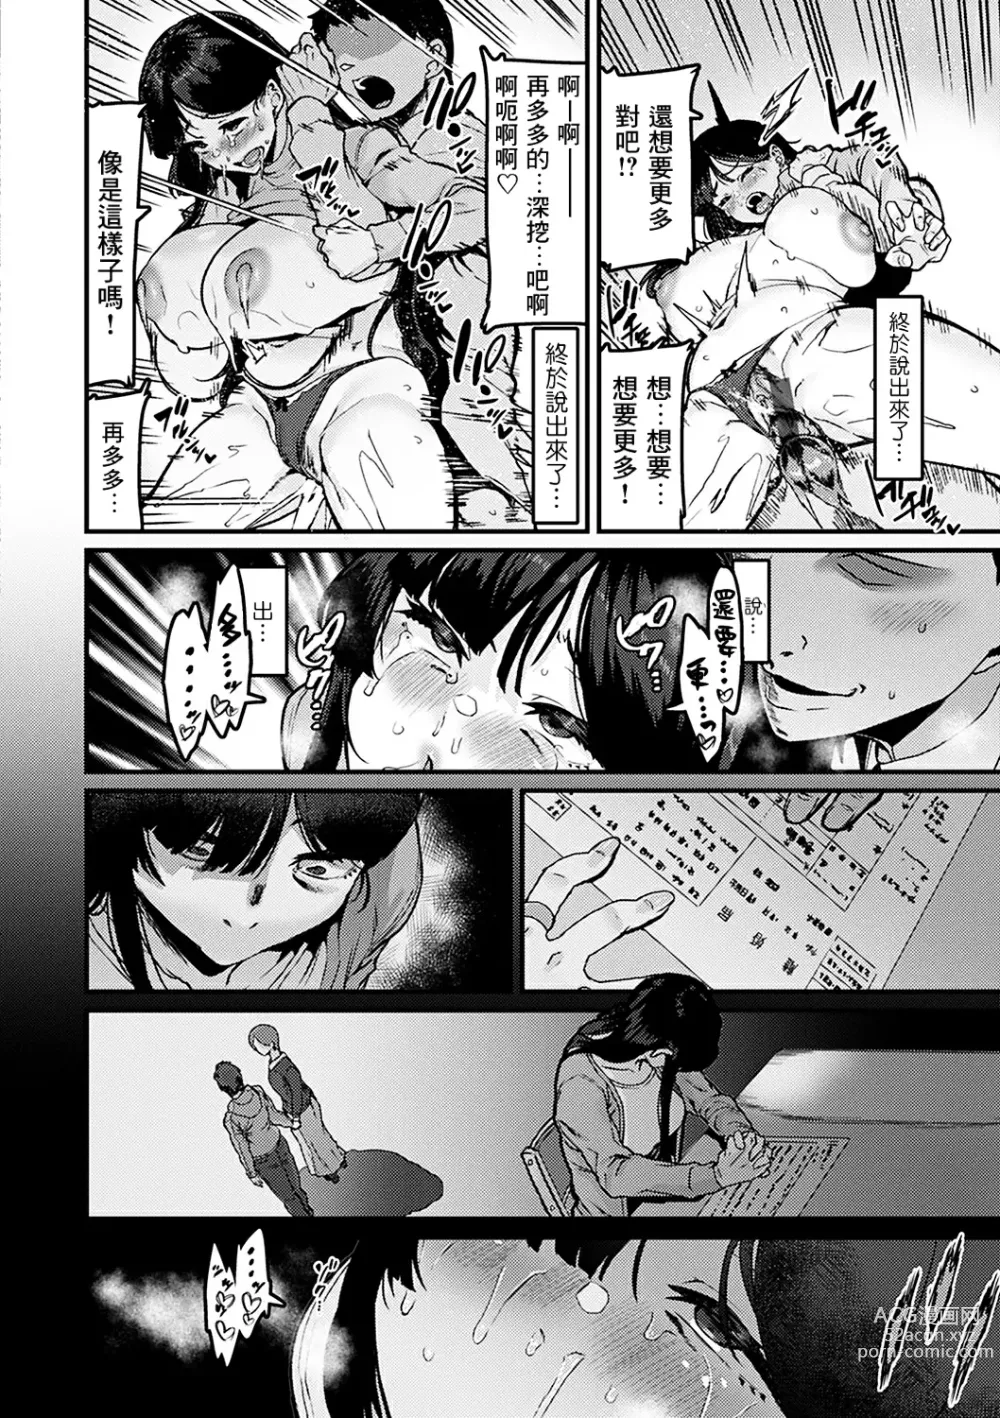 Page 12 of manga Wasurete Ii no!